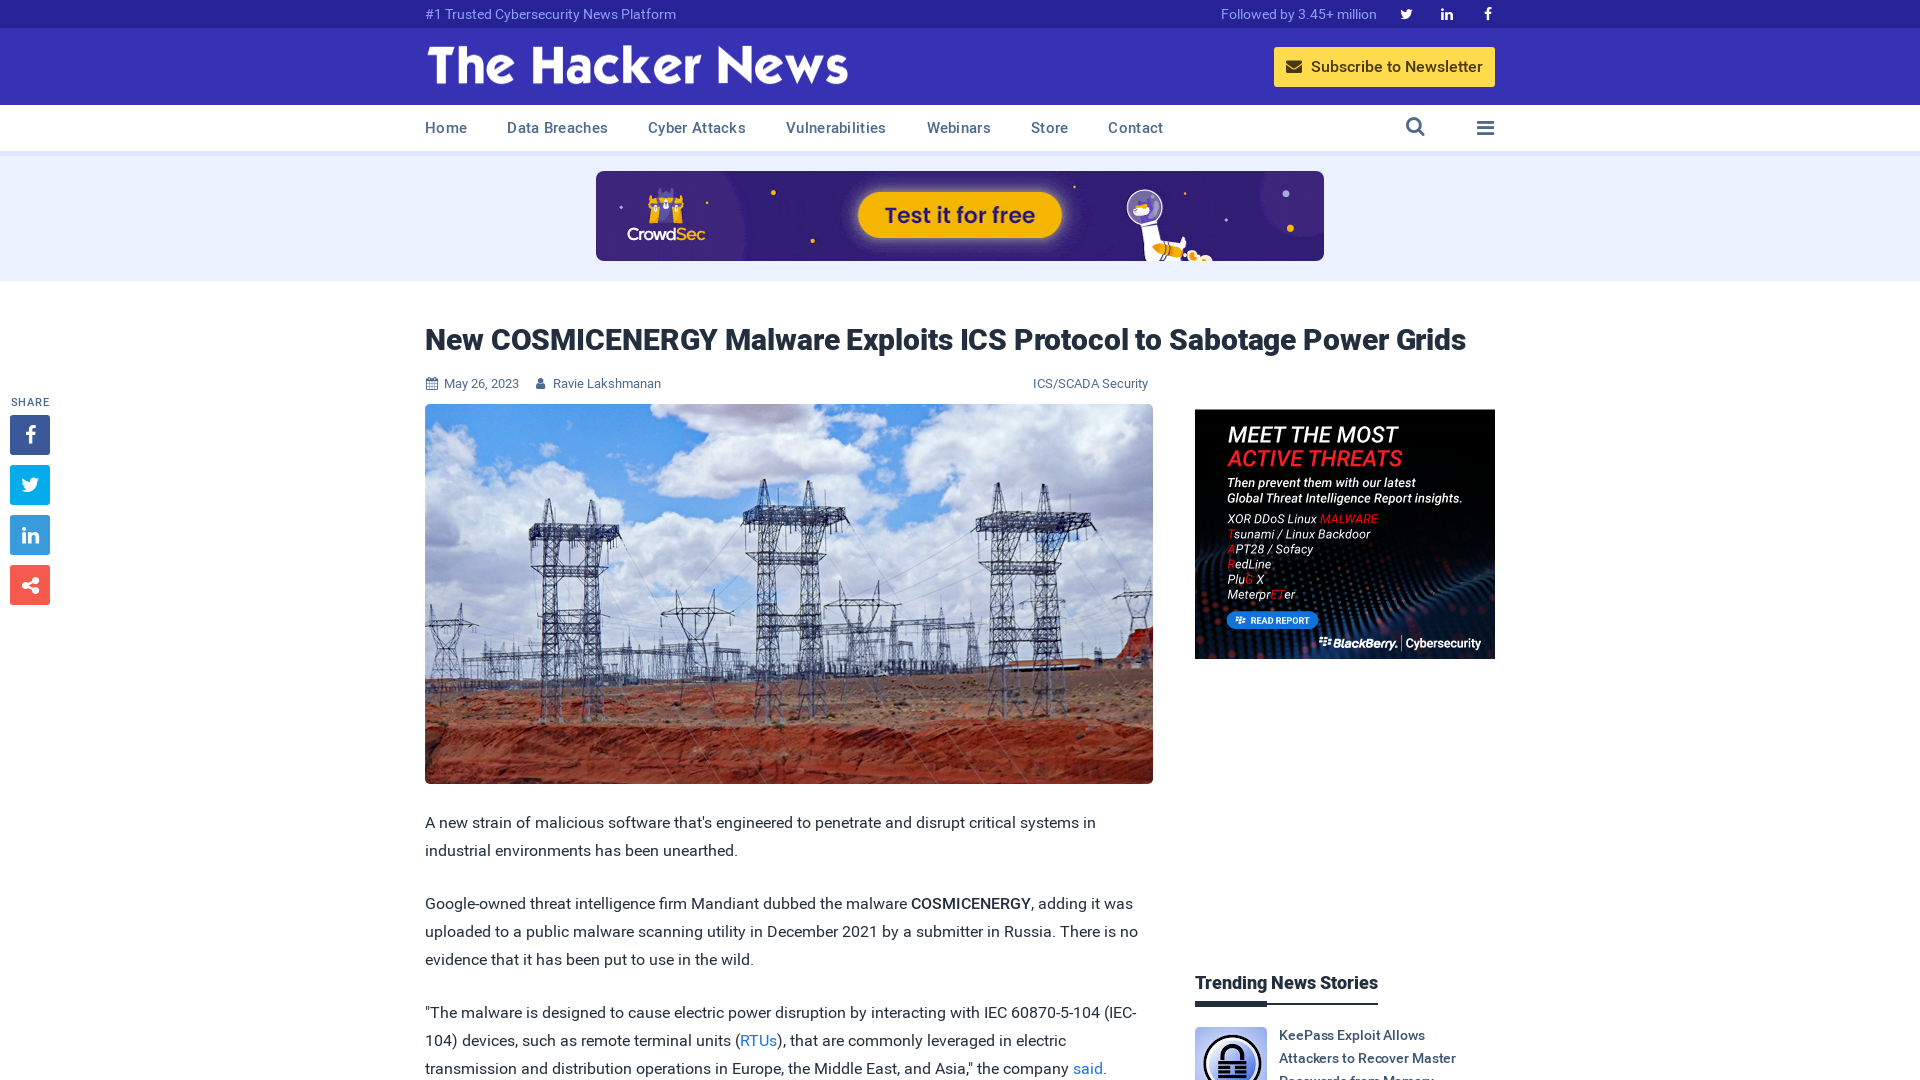 New COSMICENERGY Malware Exploits ICS Protocol to Sabotage Power Grids